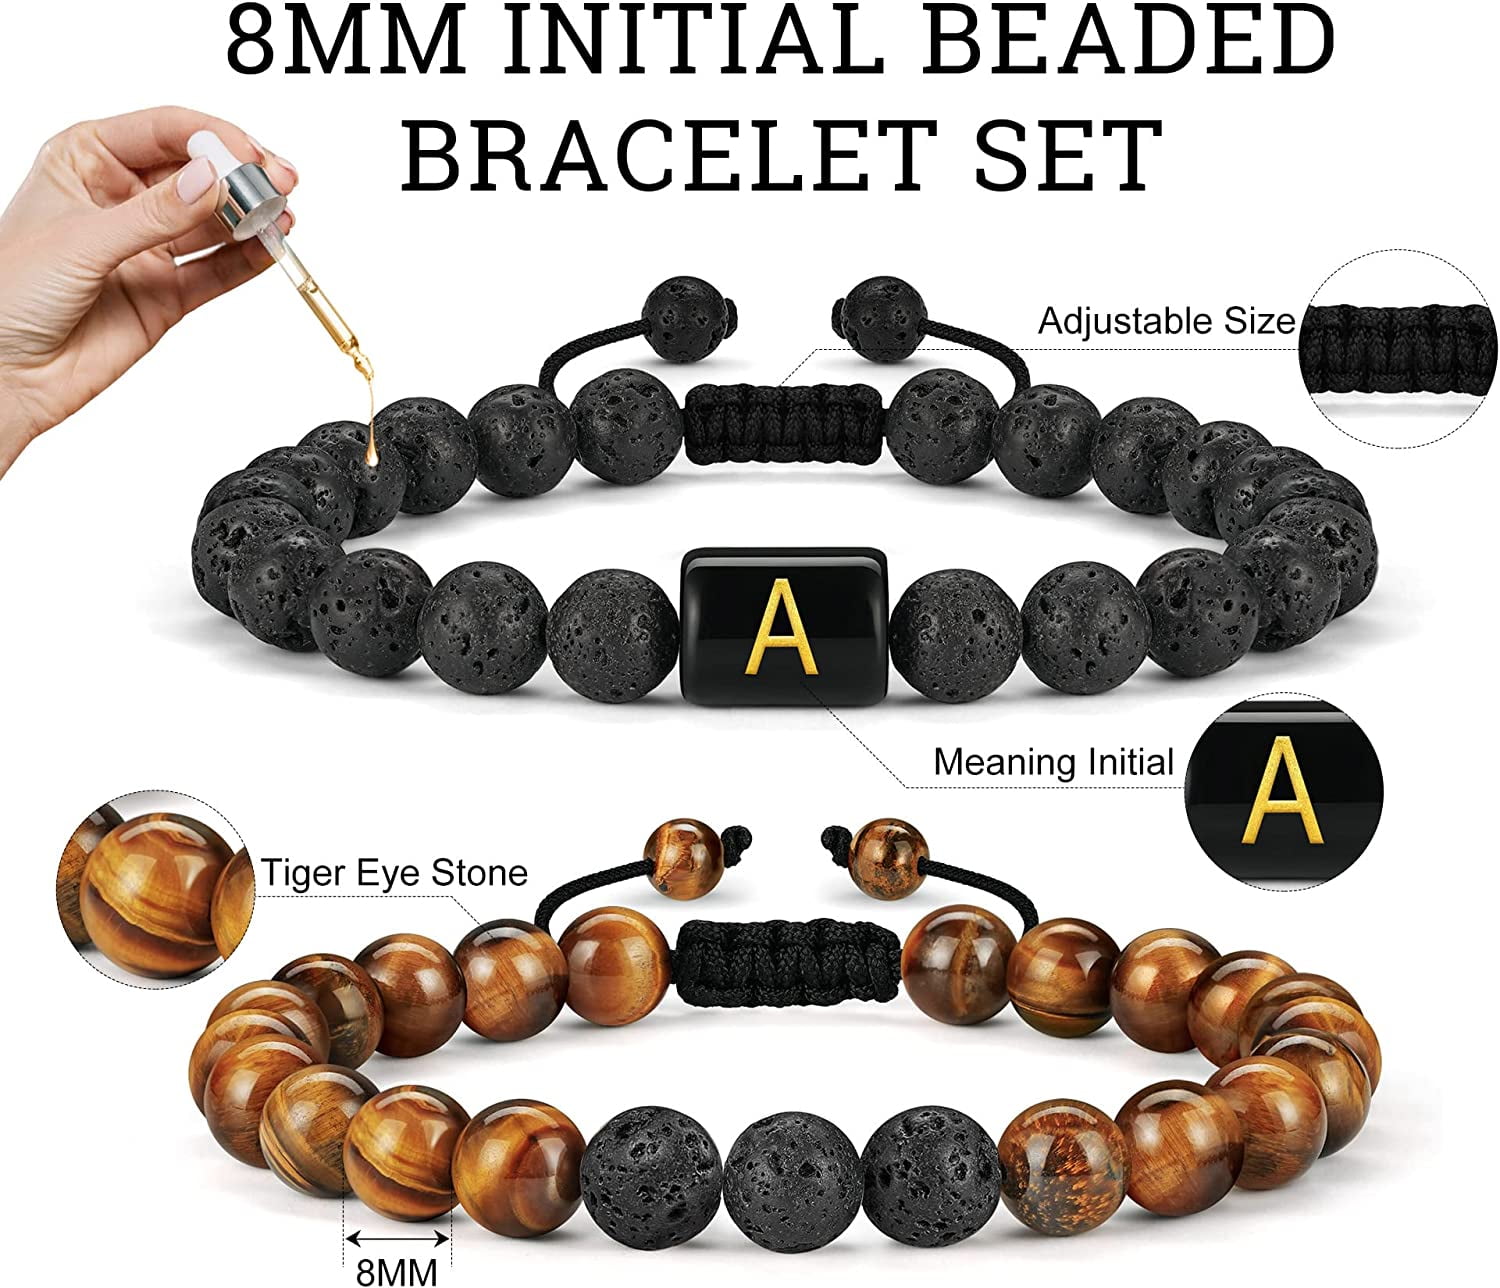 LUXEJEW Initial Beaded Bracelets for Men, 8mm Tiger Eye Lava Rock Stone  Handmade Mens Bracelet Adjustable Stress Relief Anxiety Bracelets for Men  Jewelry Gifts for Men 